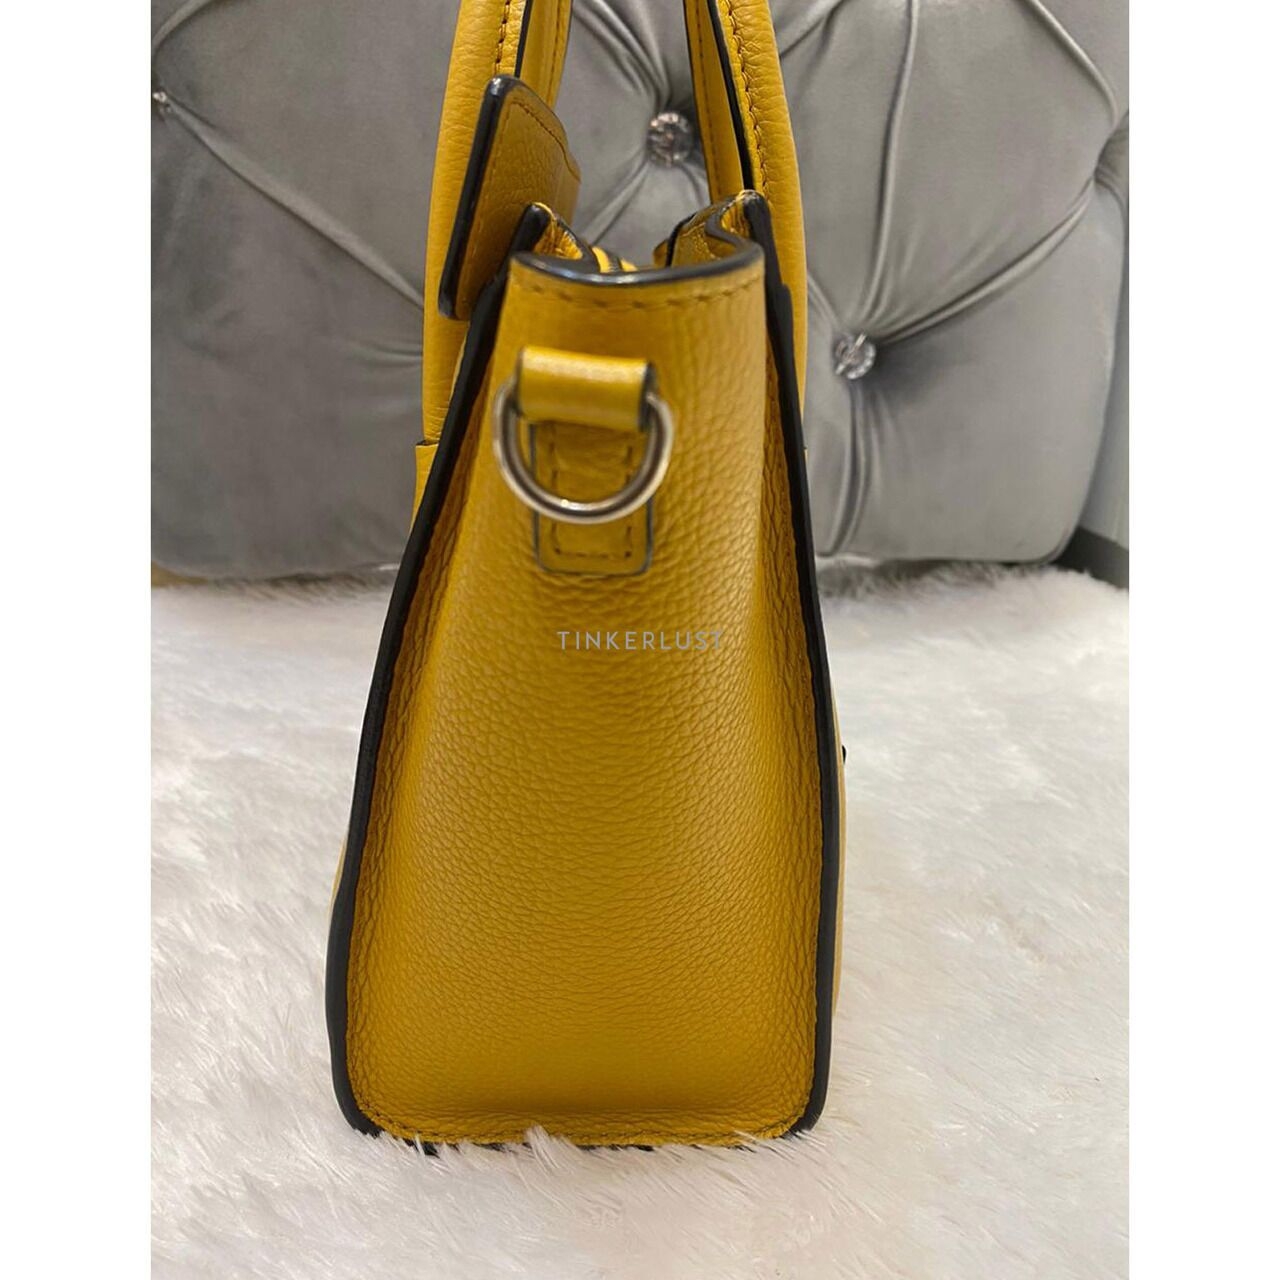 Celine Nano Luggage Yellow Satchel